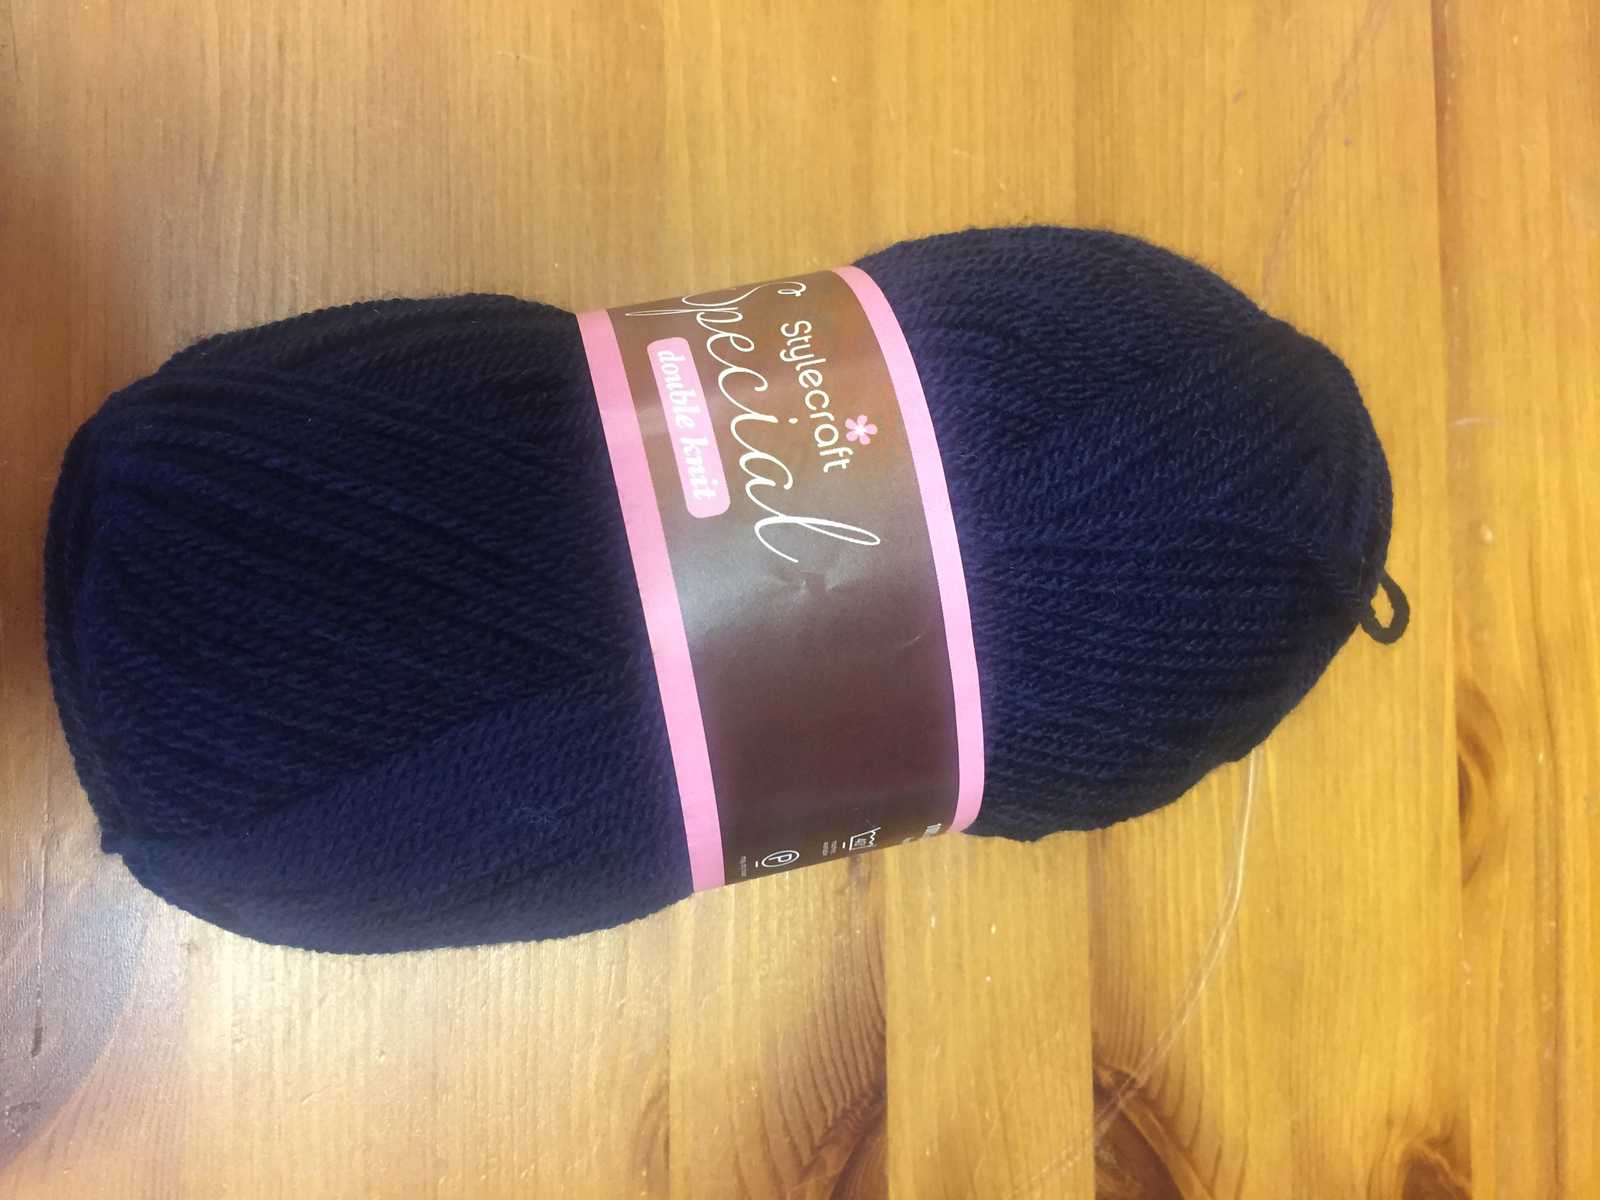 Stylecraft Special Chunky Yarn 100g - Dark Brown 1004 — Material Needs